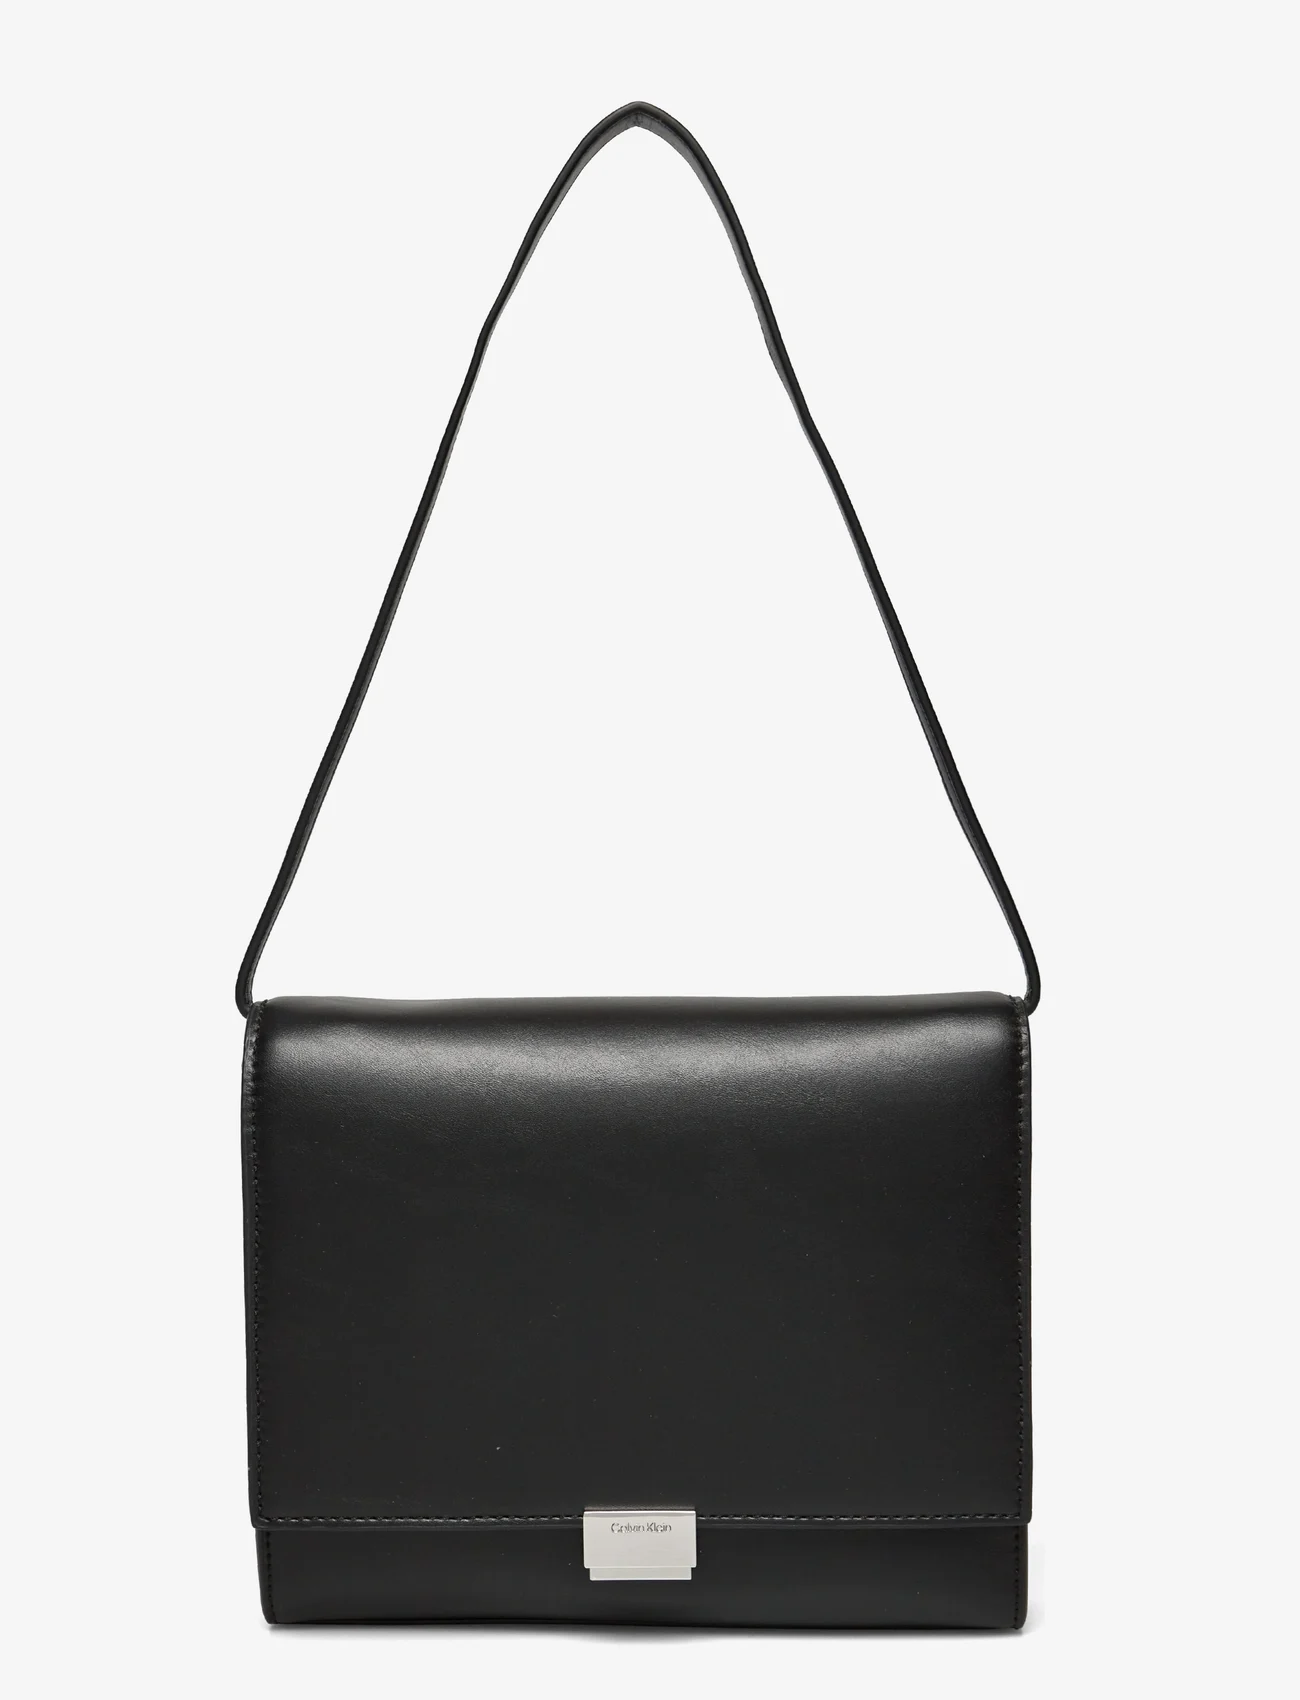 Calvin Klein - ARCHIVE HARDWARE SHOULDER BAG - party wear at outlet prices - ck black - 0